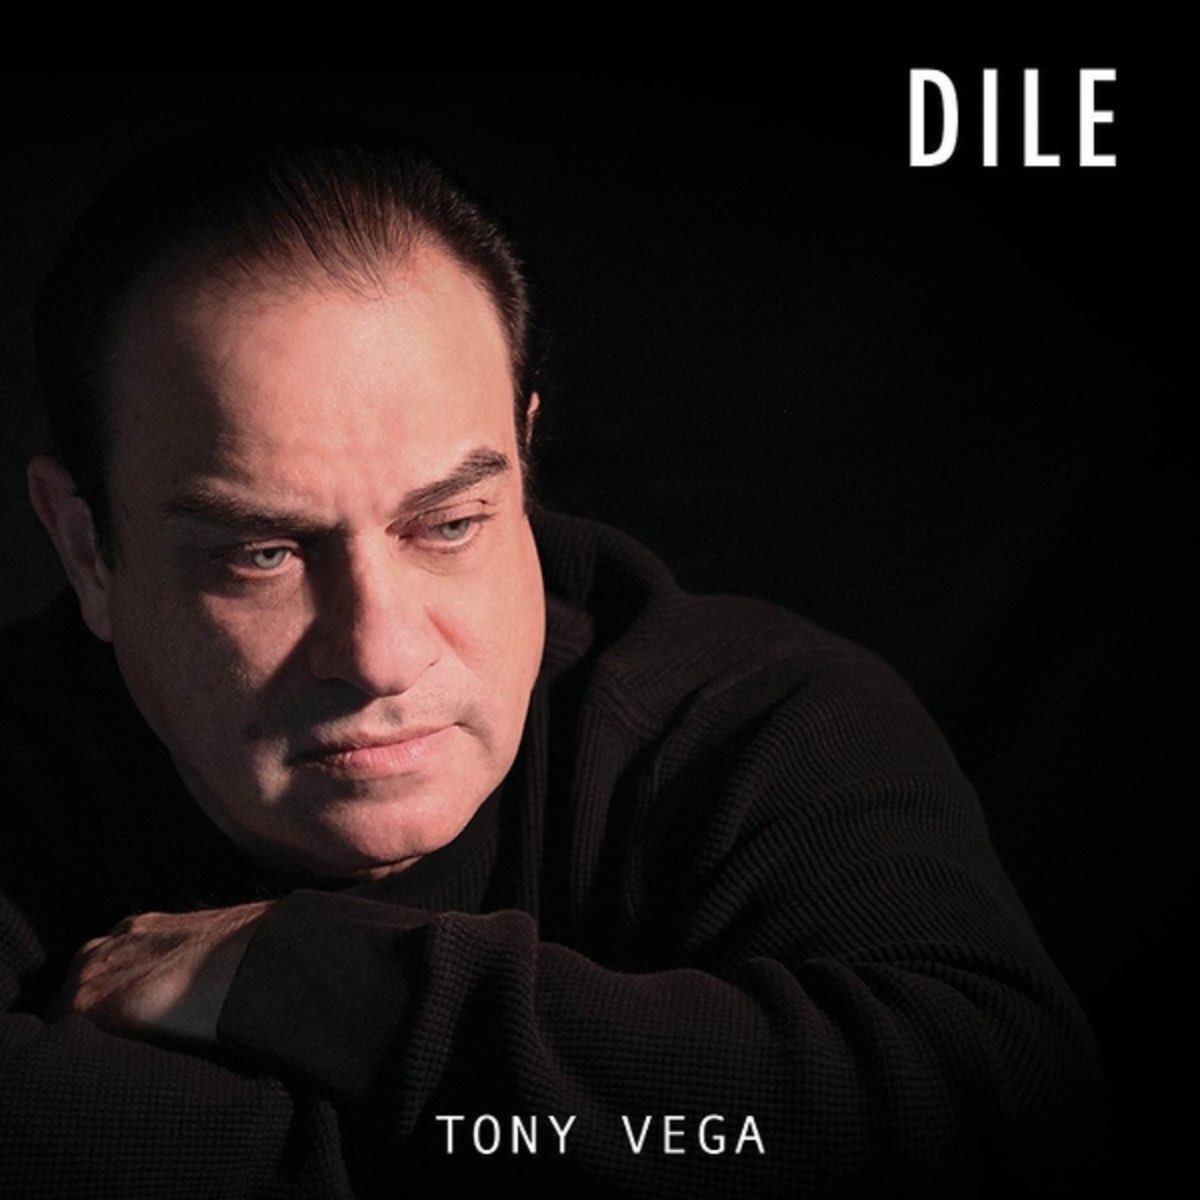 Dile - Single by Tony Vega on Apple Music